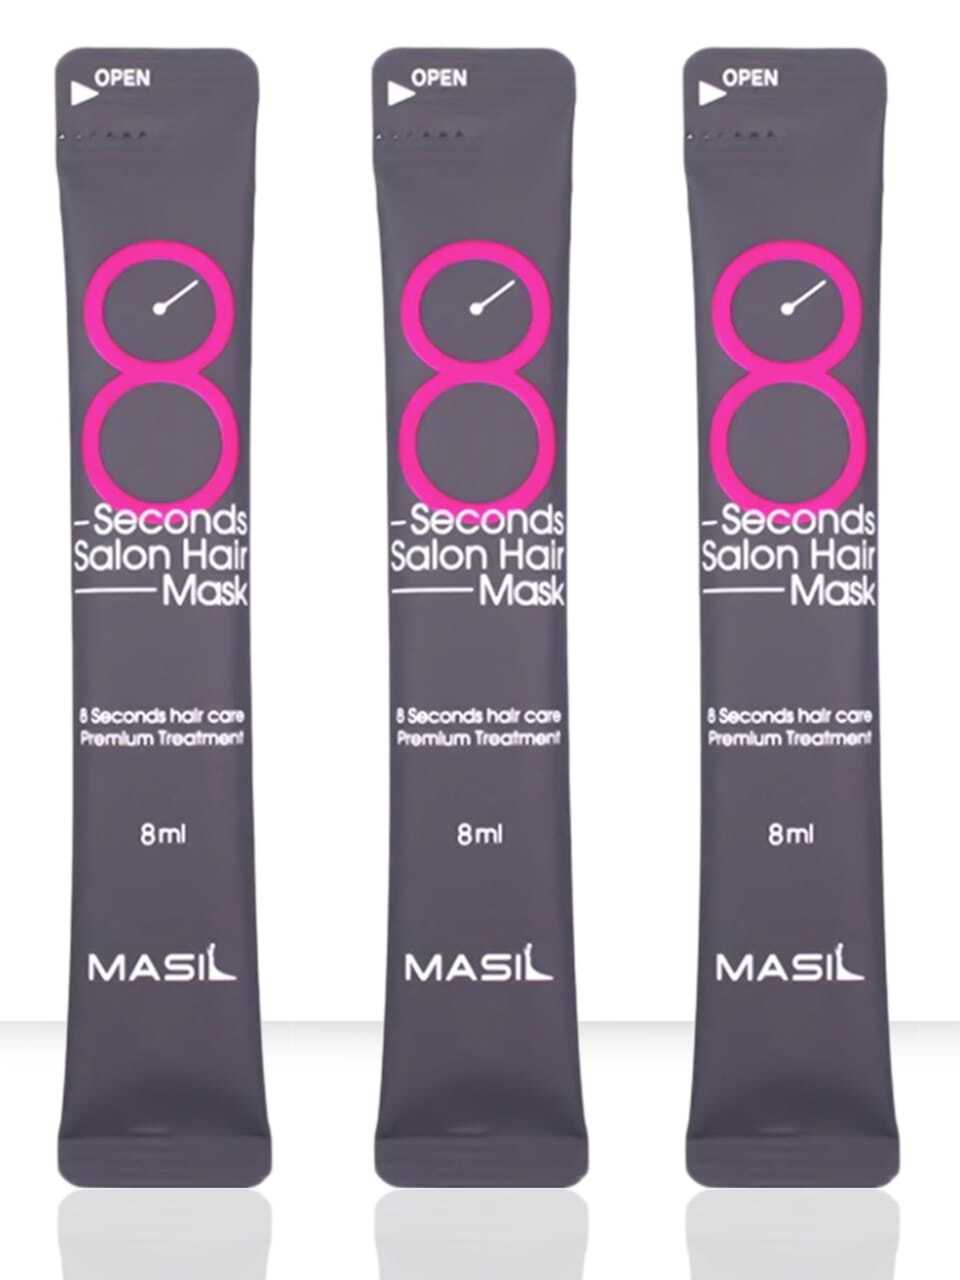 Маска для волос масил. Masil 8 seconds Salon hair Mask 8 мл. Маска для волос masil 8 seconds Salon 8мл. Маска 8 секунд Корея. Маска корейская Масил 8.